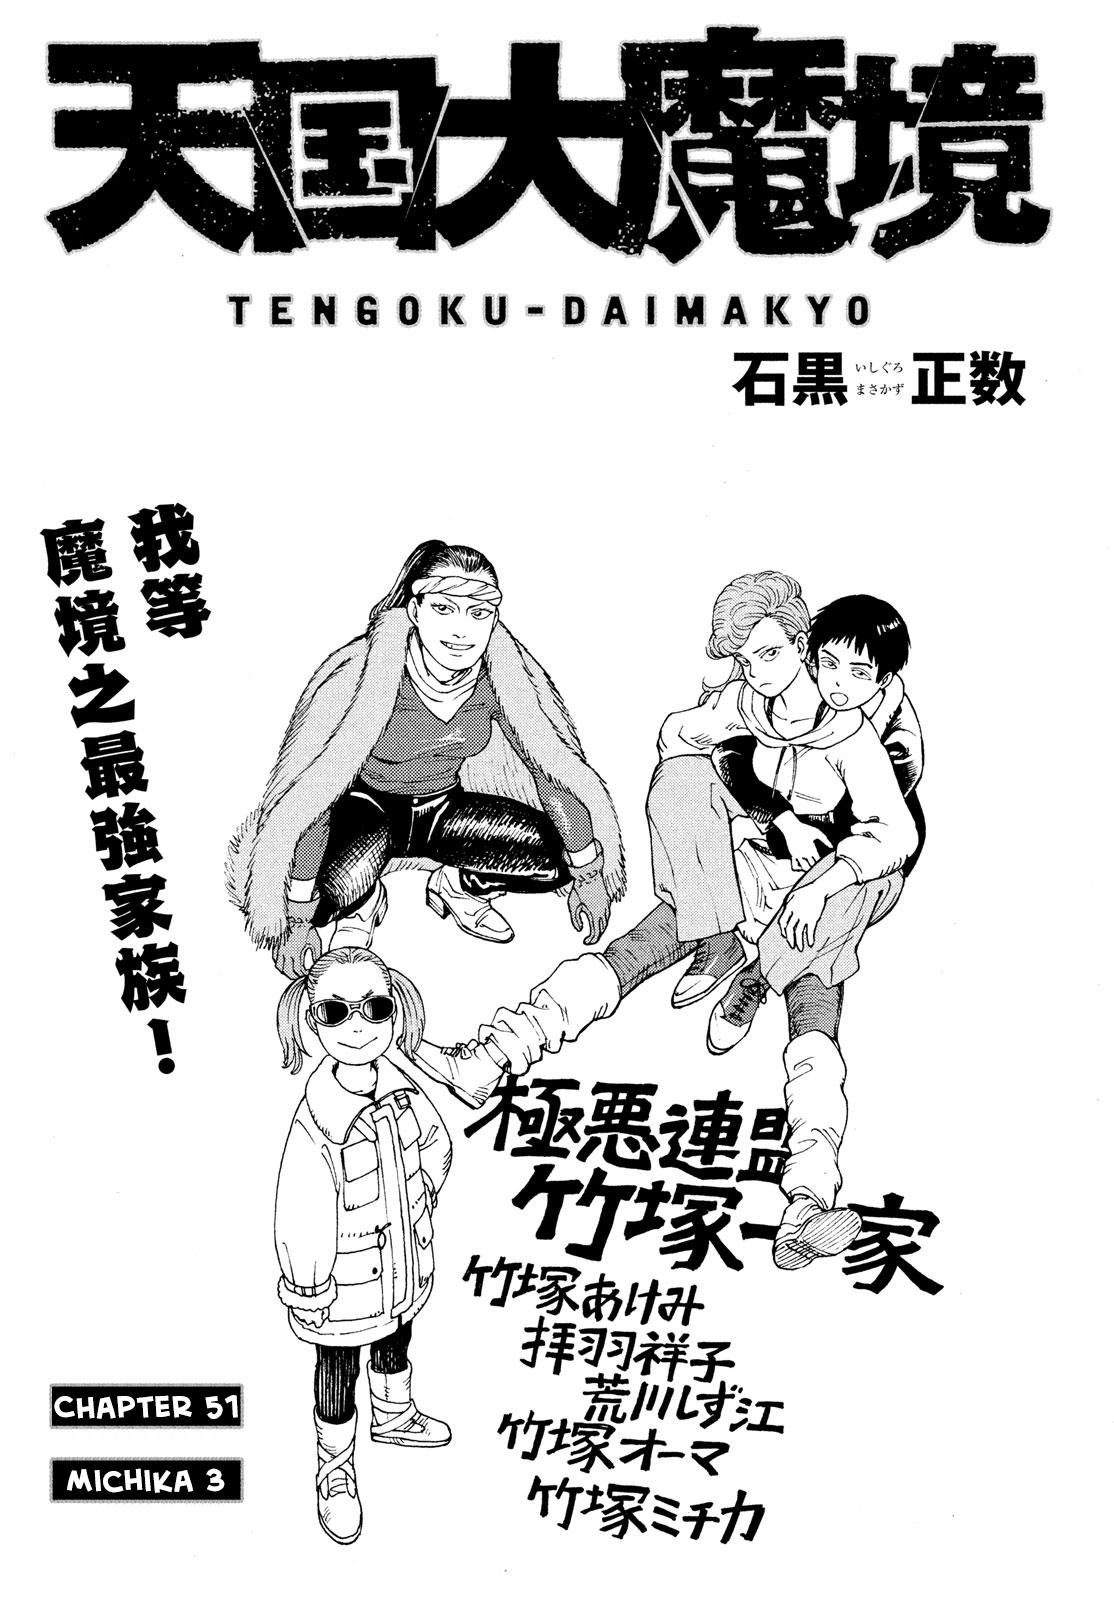 Read Tengoku Daimakyou Vol.1 Chapter 1: Tokio - Manganelo